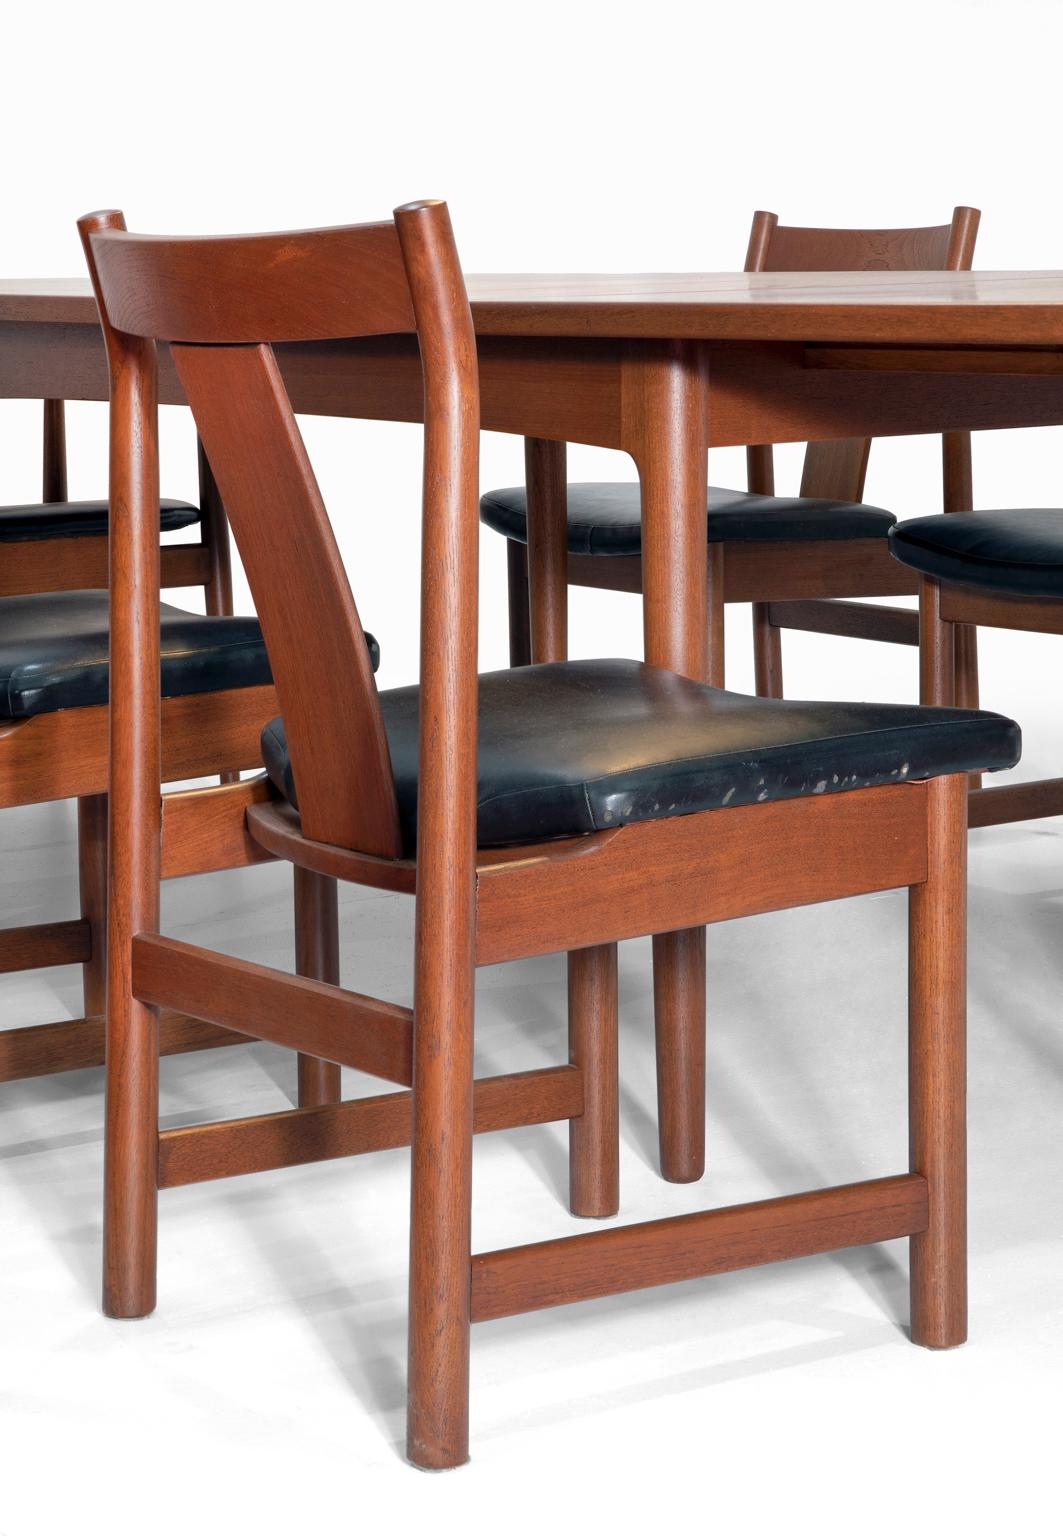 Henrik Worts Erik Worts Danish Mid-Century Modern Mahogany Table & Chairs For Sale 2